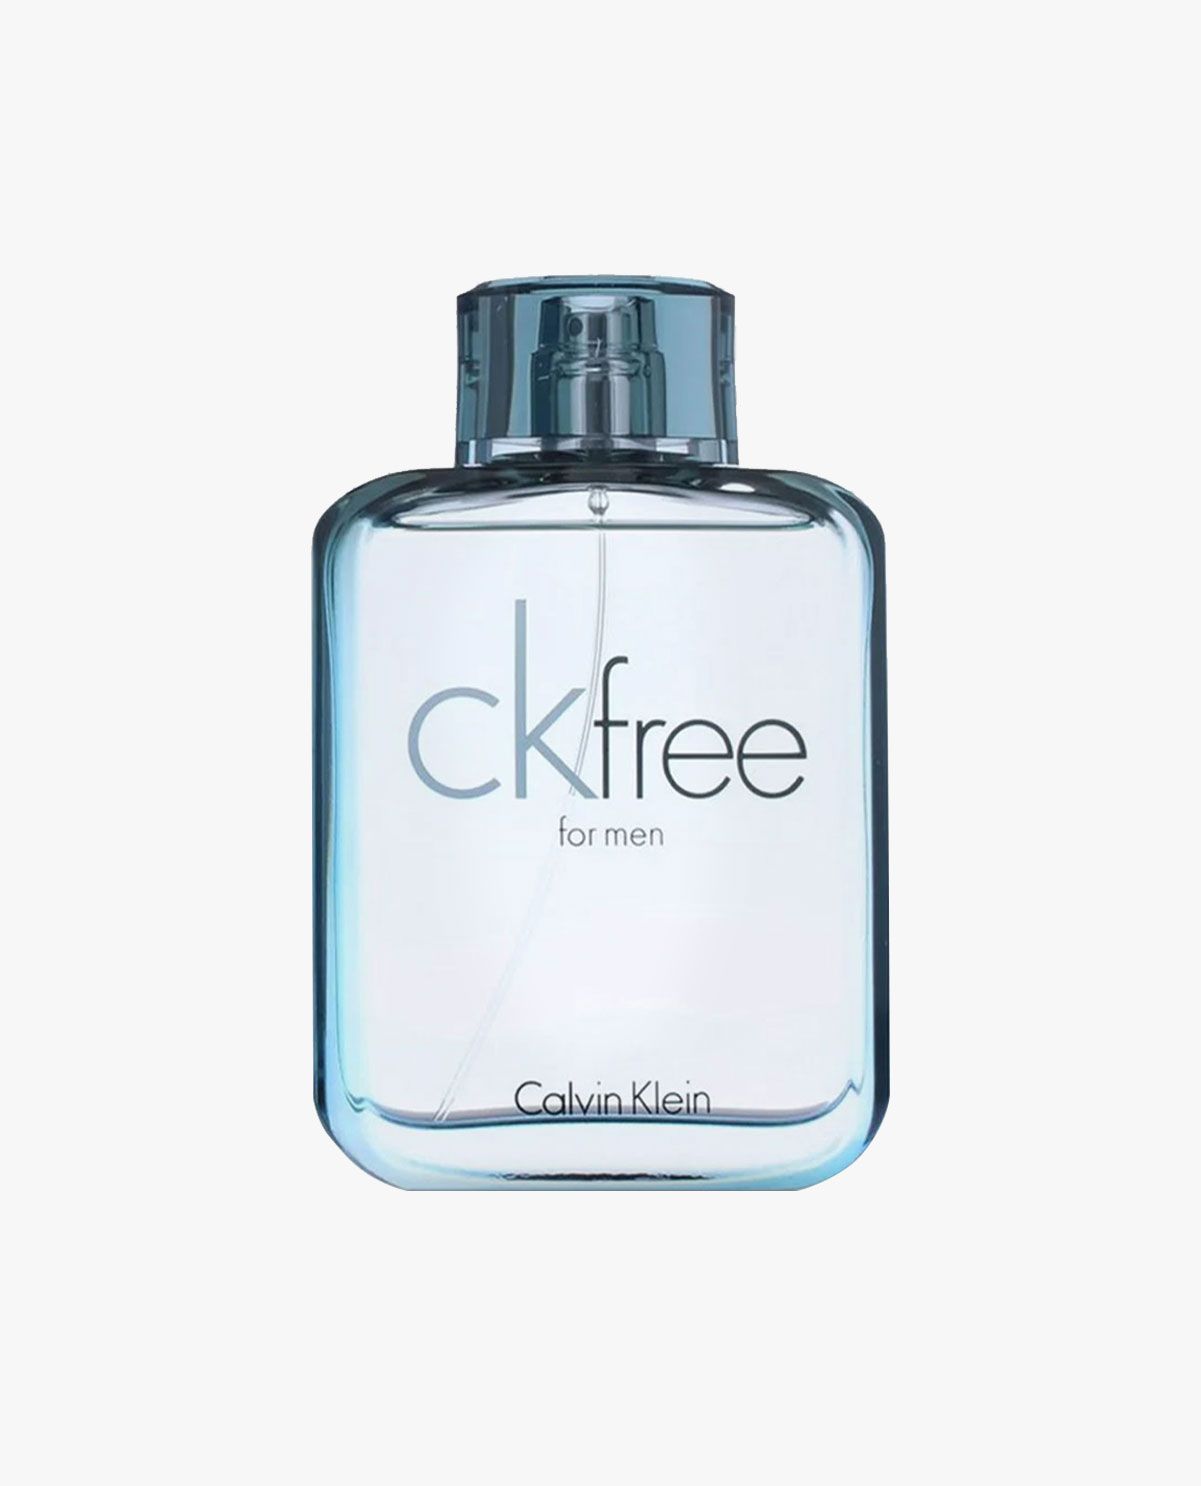 Nước hoa Nam Calvin Klein CK Free for Men – VMIA Perfume